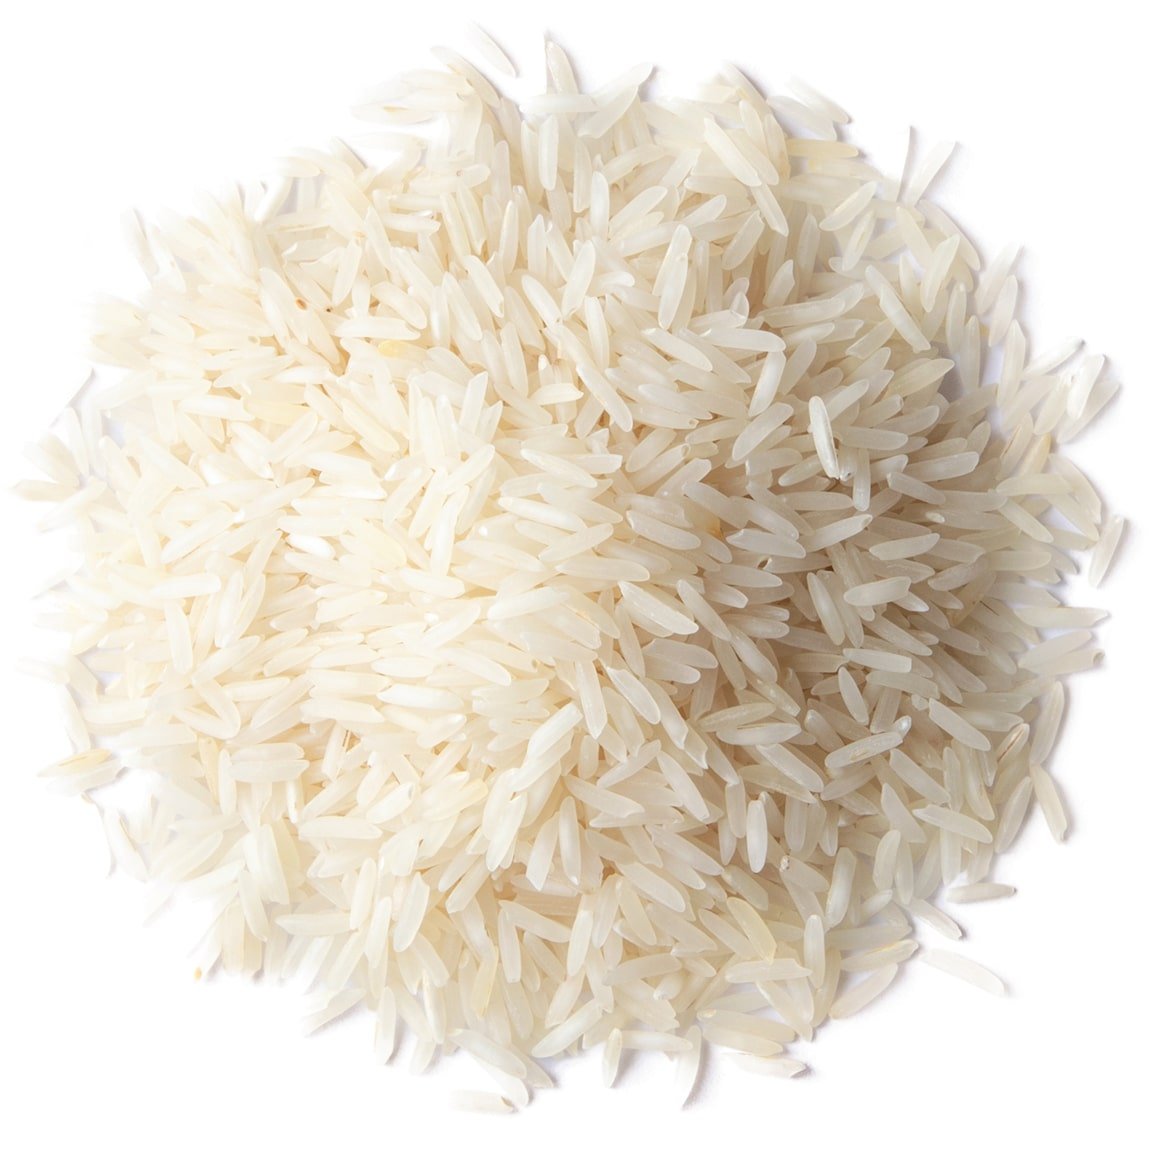 Thai Hom Mali Jasmine White Rice Buy in Bulk from Food to Live